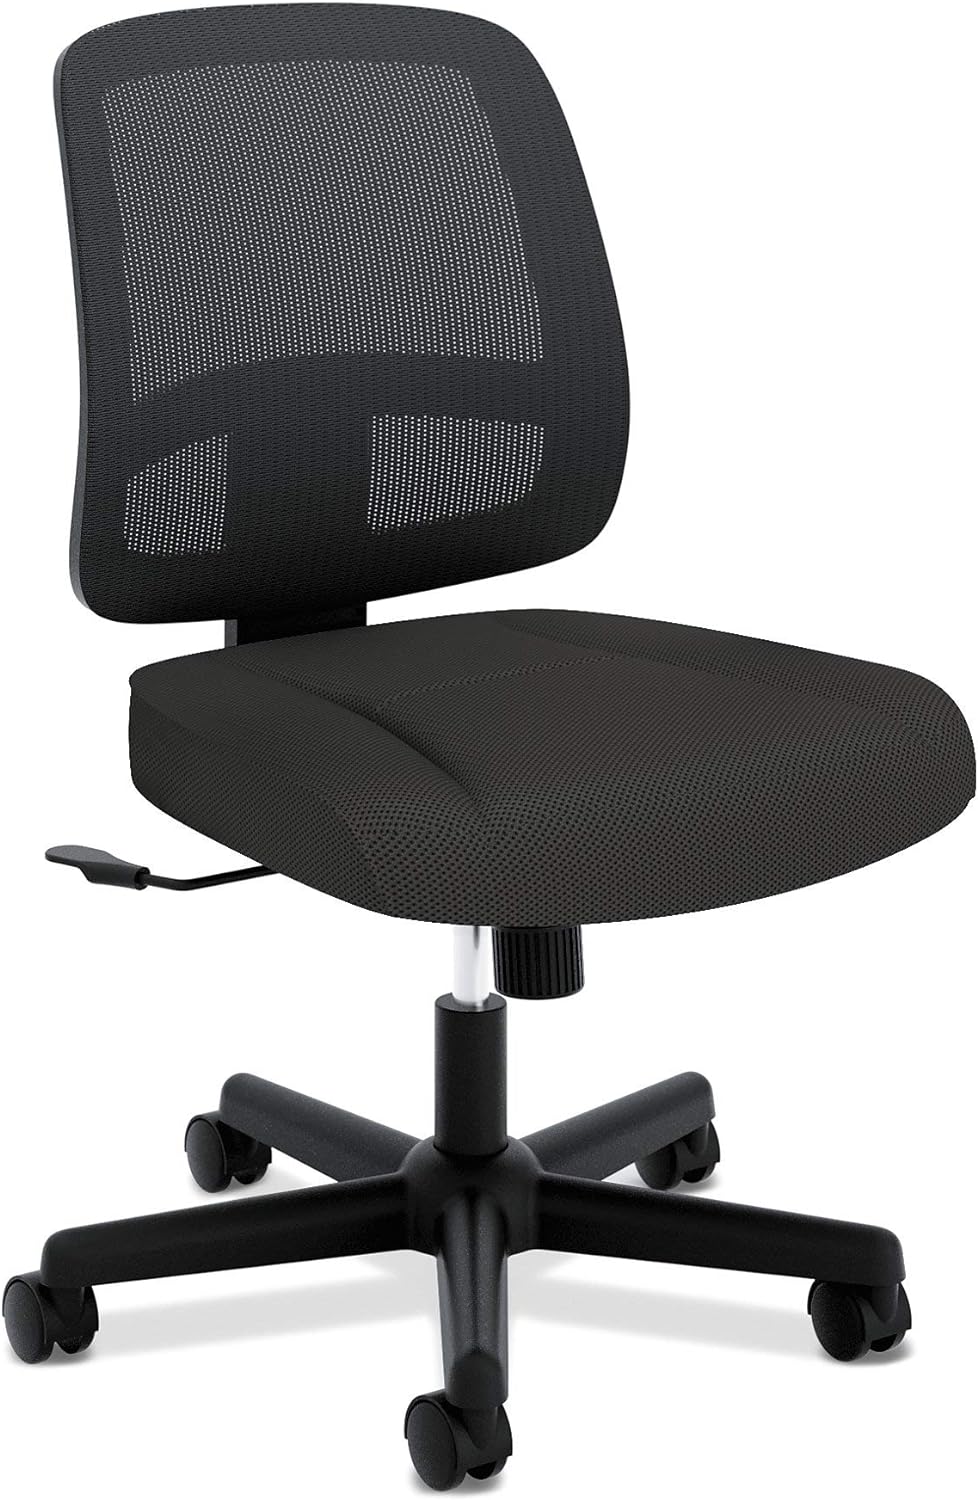 HON ValuTask Task Chair, Mesh Back Computer Chair for Office Desk, Black (HVL205)